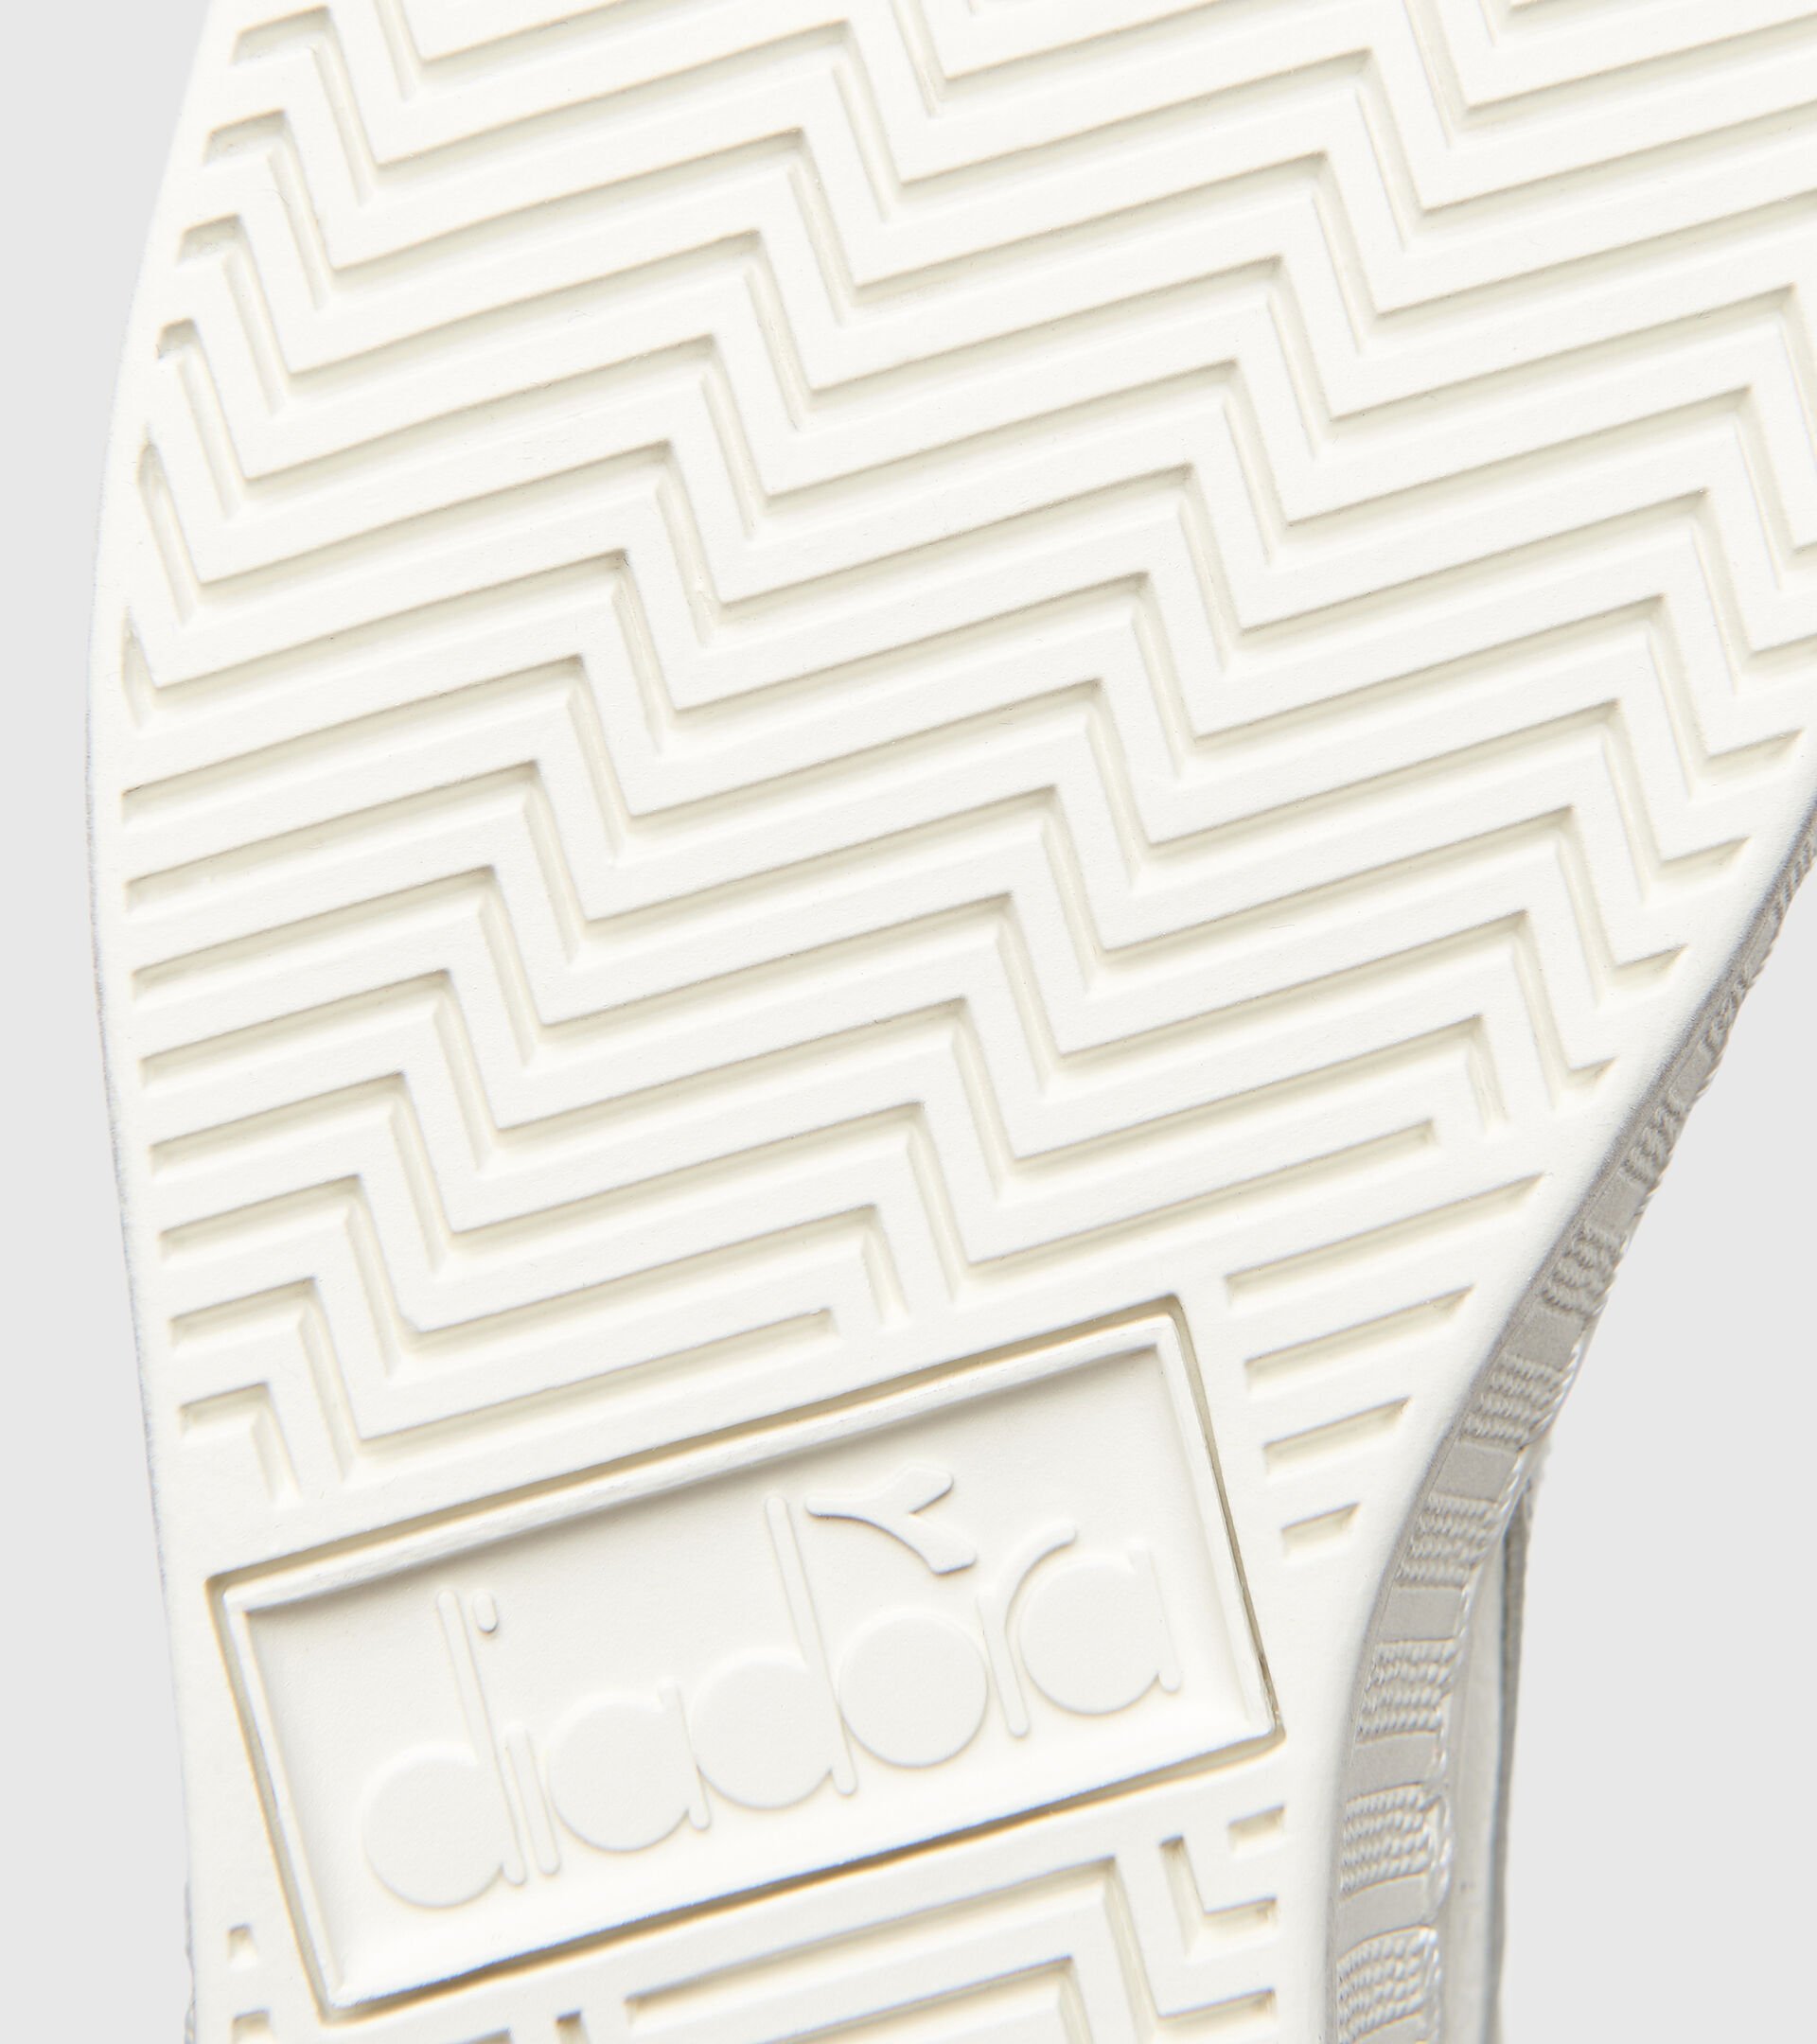 Sports shoes - Unisex GAME L LOW WAXED WHITE/GLACIER GRAY - Diadora